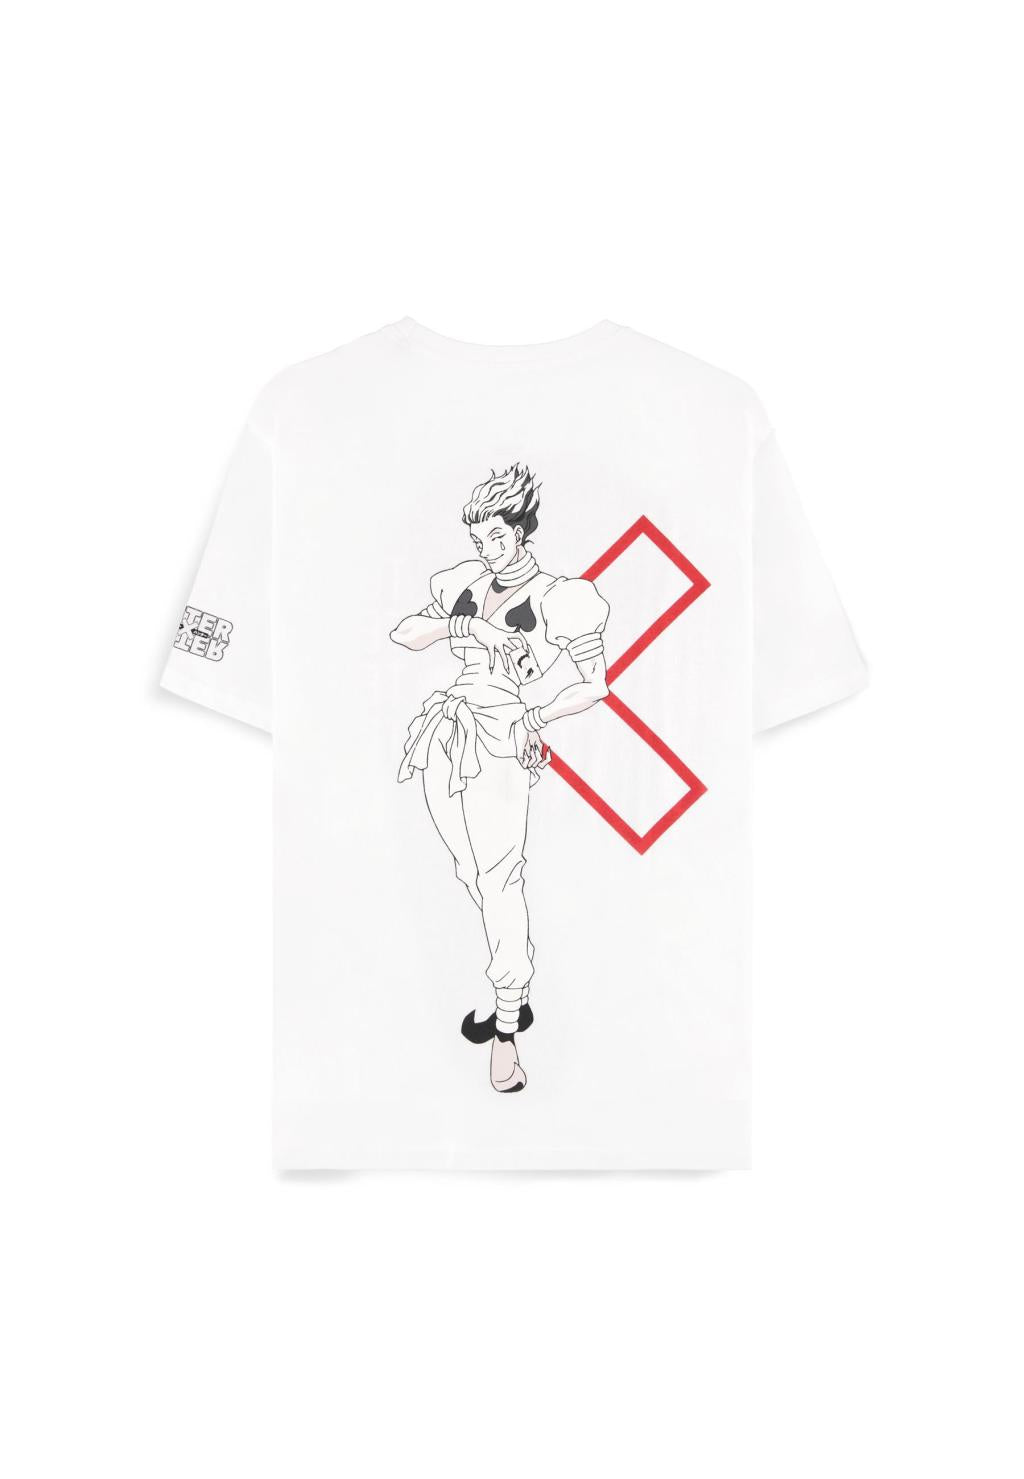 HUNTER X HUNTER - Hisoka - Women's T-shirt (XXL)